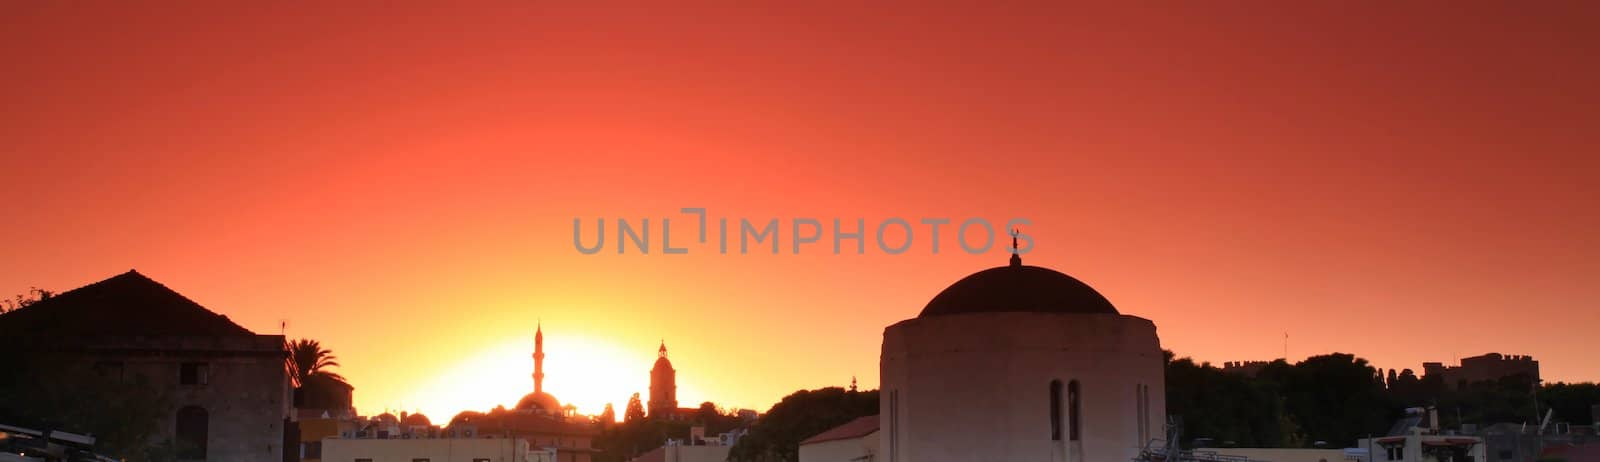 Old Rhodes town sunset by olliemt